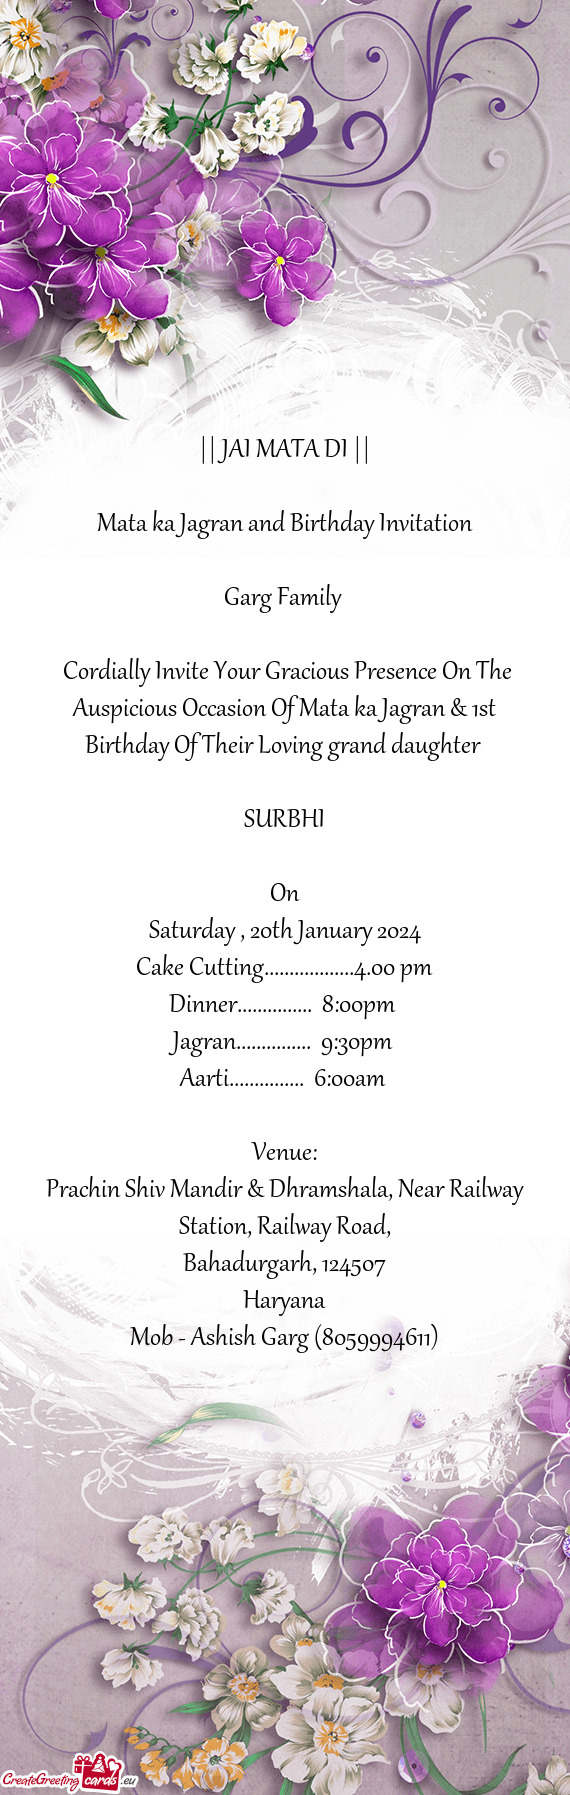 Cordially Invite Your Gracious Presence On The Auspicious Occasion Of Mata ka Jagran & 1st Birthday